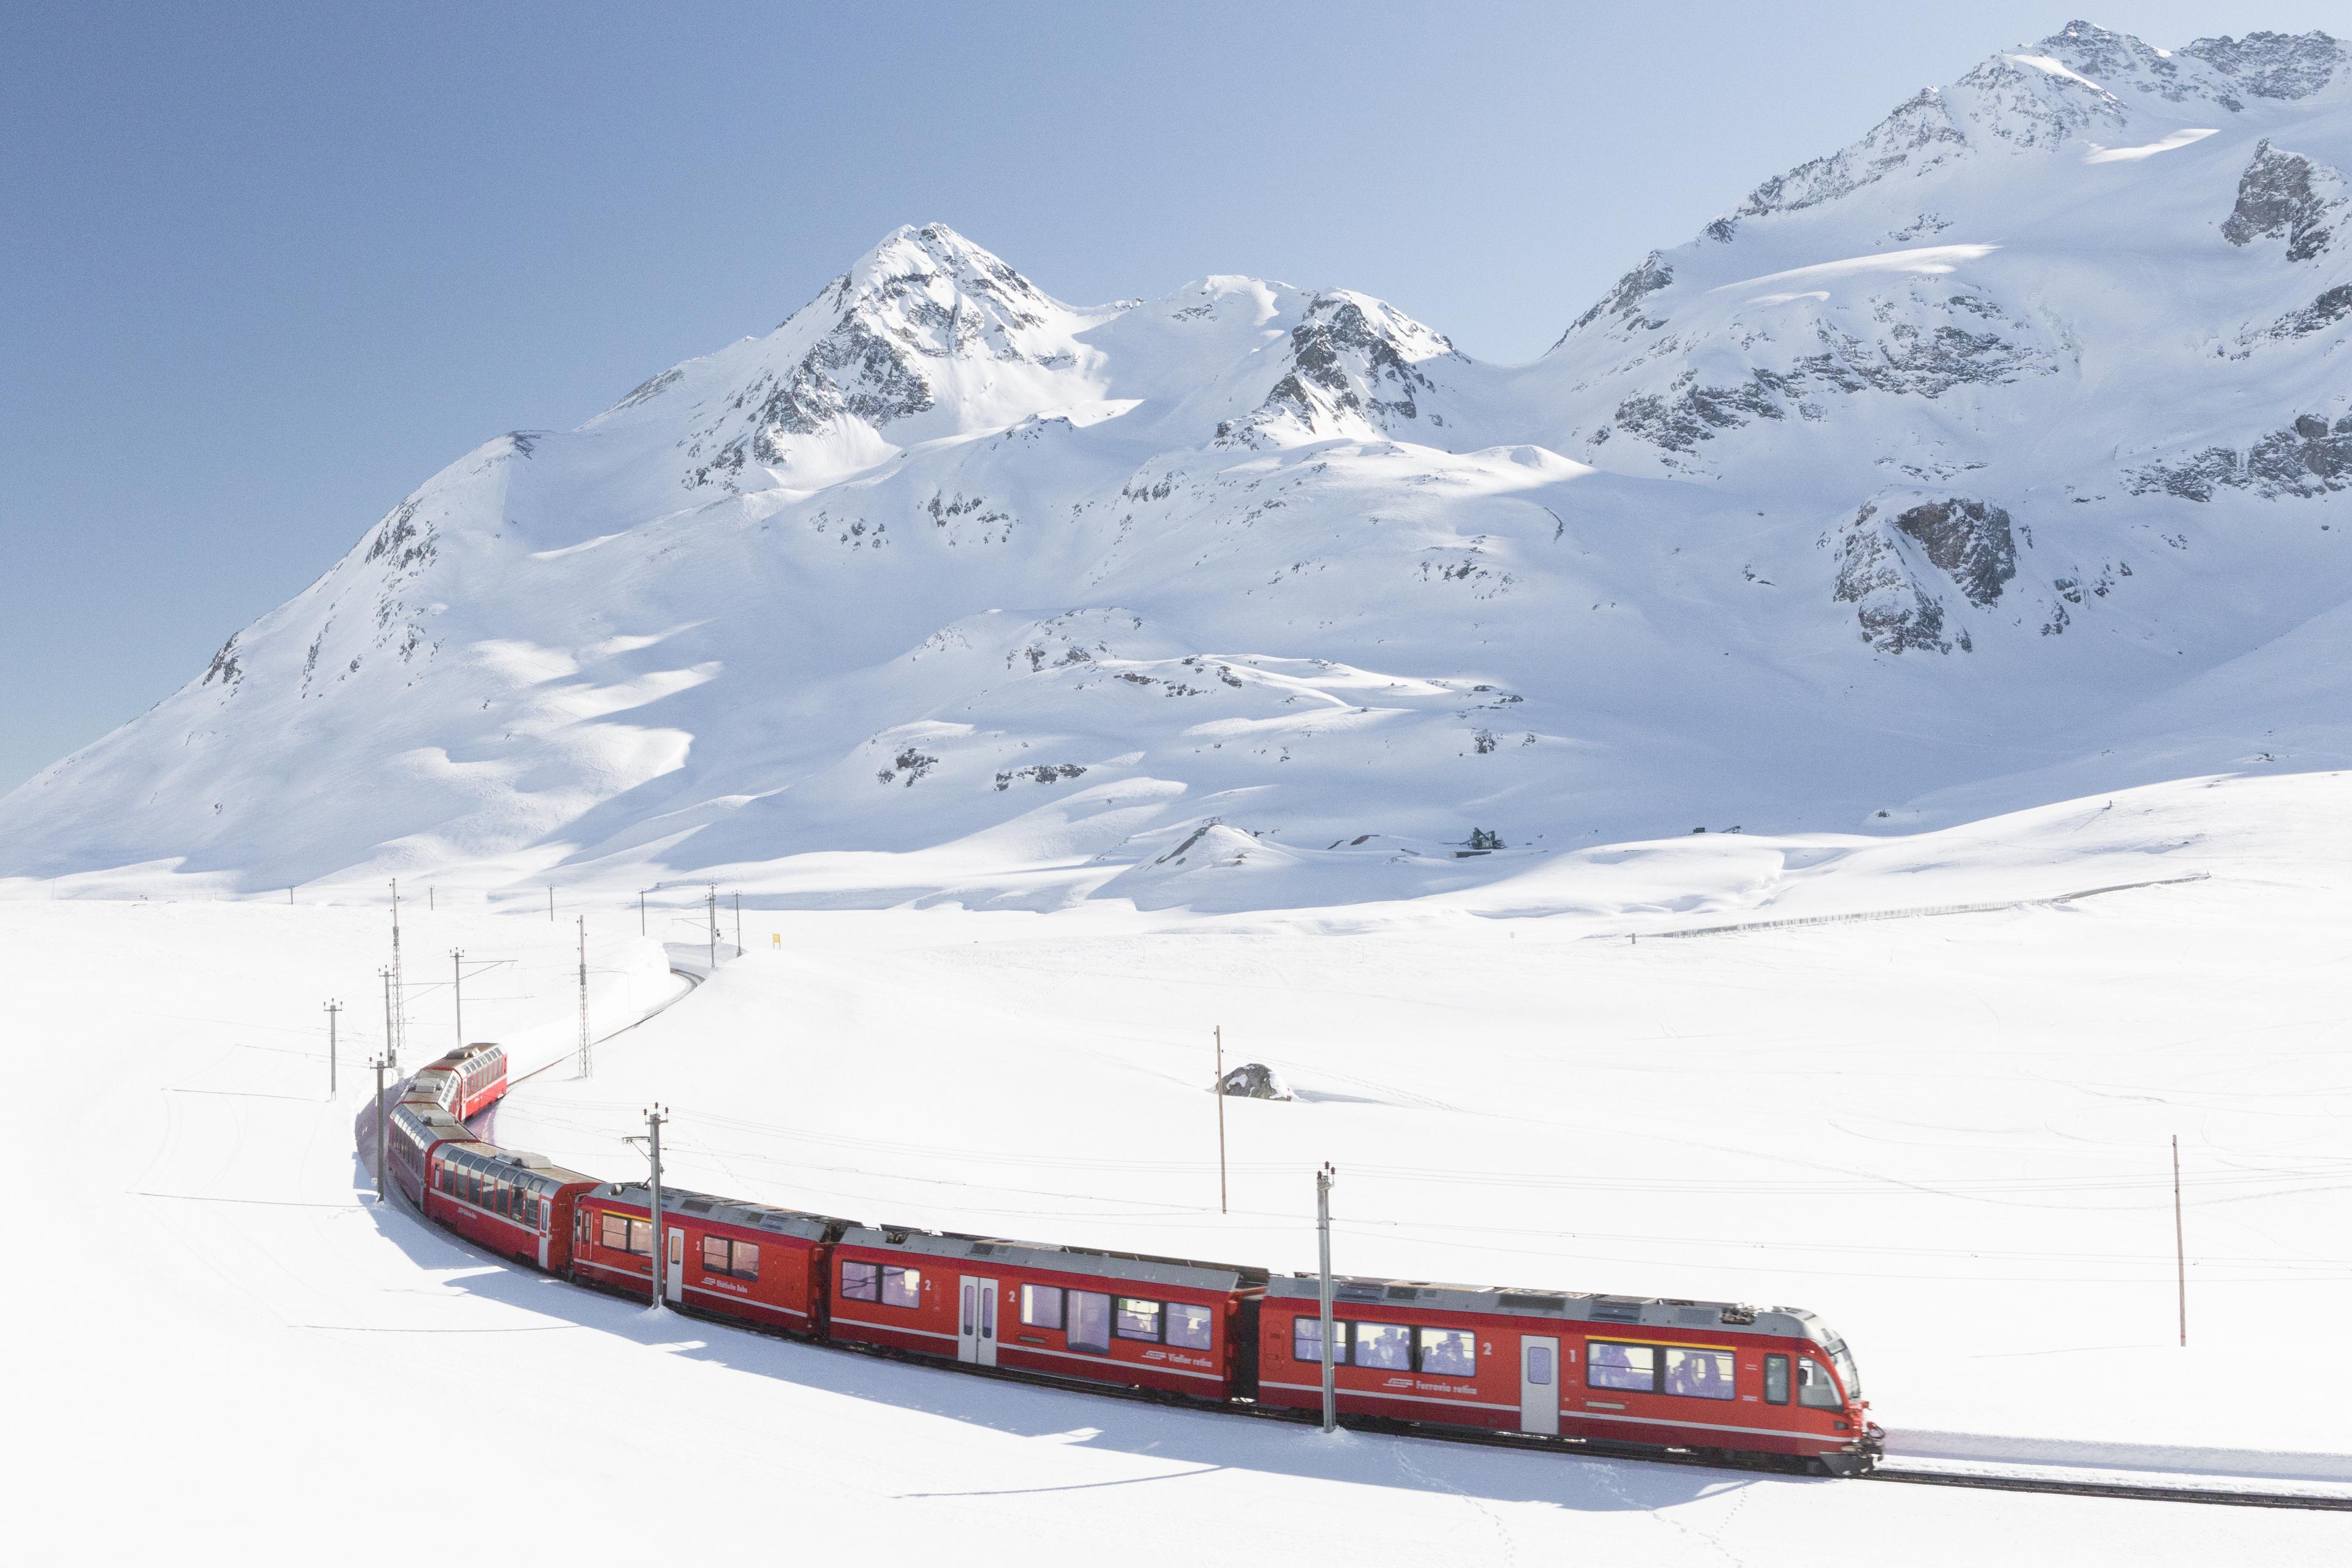 St. Moritz ski holiday main cover image - Blured placeholder